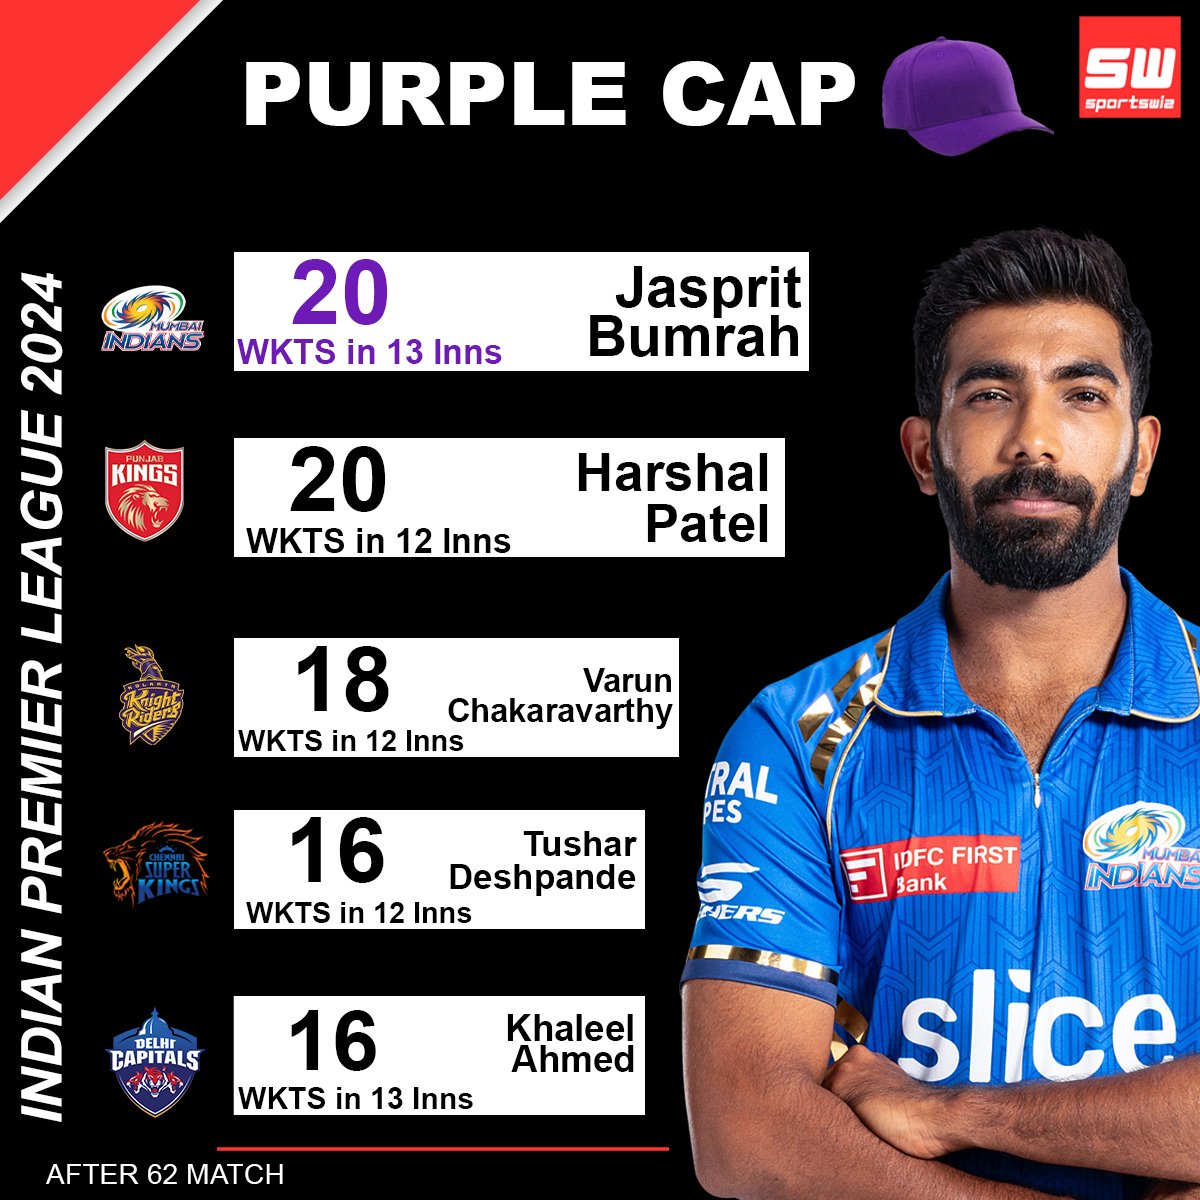 Jasprit Bumrah hold the top positions of the Purple Cap race, with 20 wkts in 13 innings.
.
#Sportswiz #JaspritBumrah #PurpleCap #RCBvsCSK #GTvsKKR #KKRvsGT #Wicket #SimarjeetSingh #TusharDeshpande #Gaikwad #Jaiswal #Buttler #ChennaiSuperKings #CSKvsRR #RRvsCSK